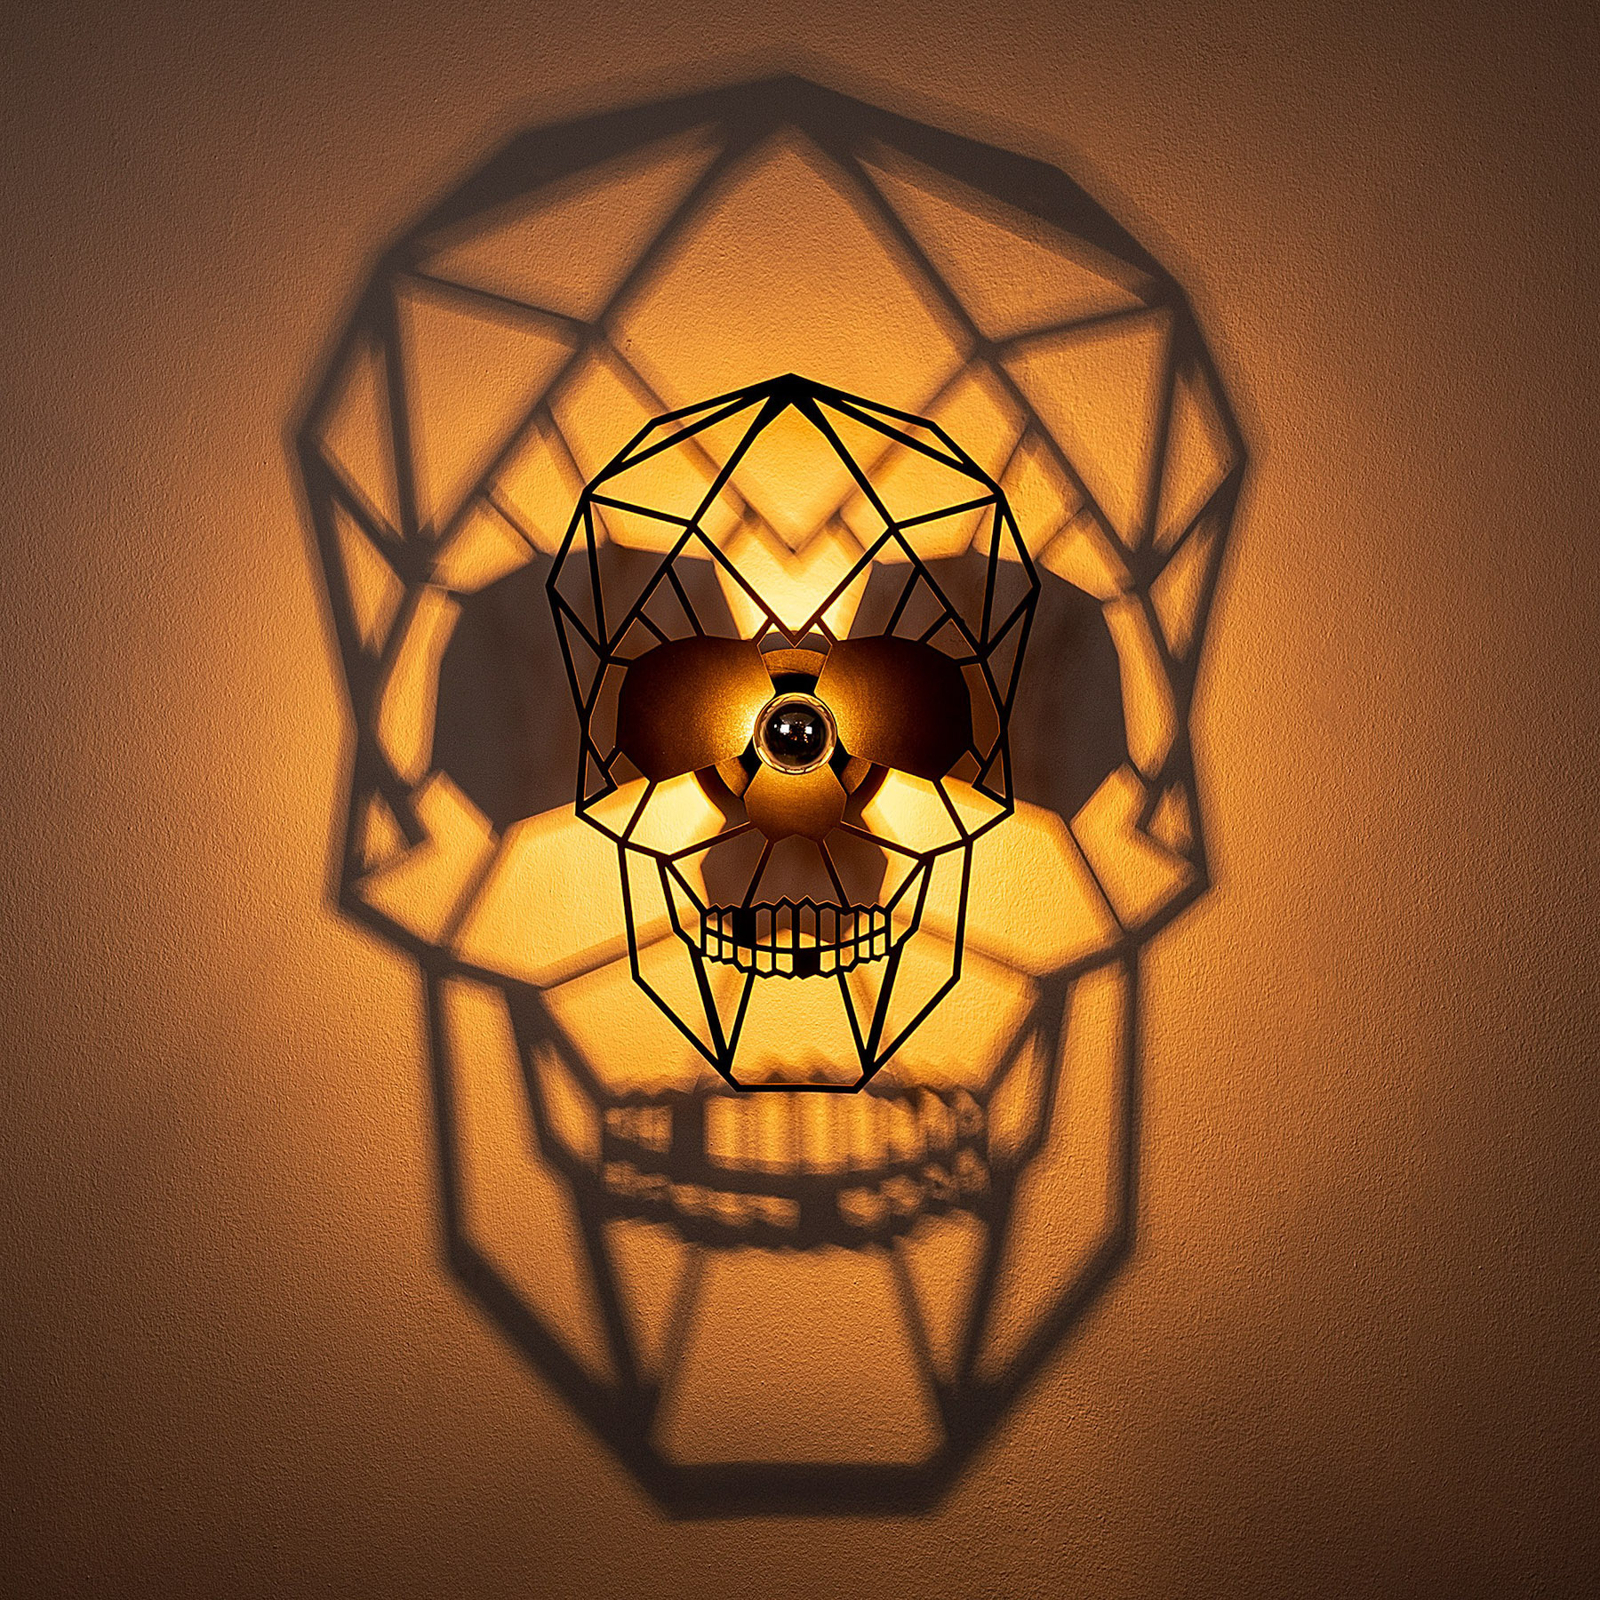 W-050 wall lamp, black skull design, laser-cut